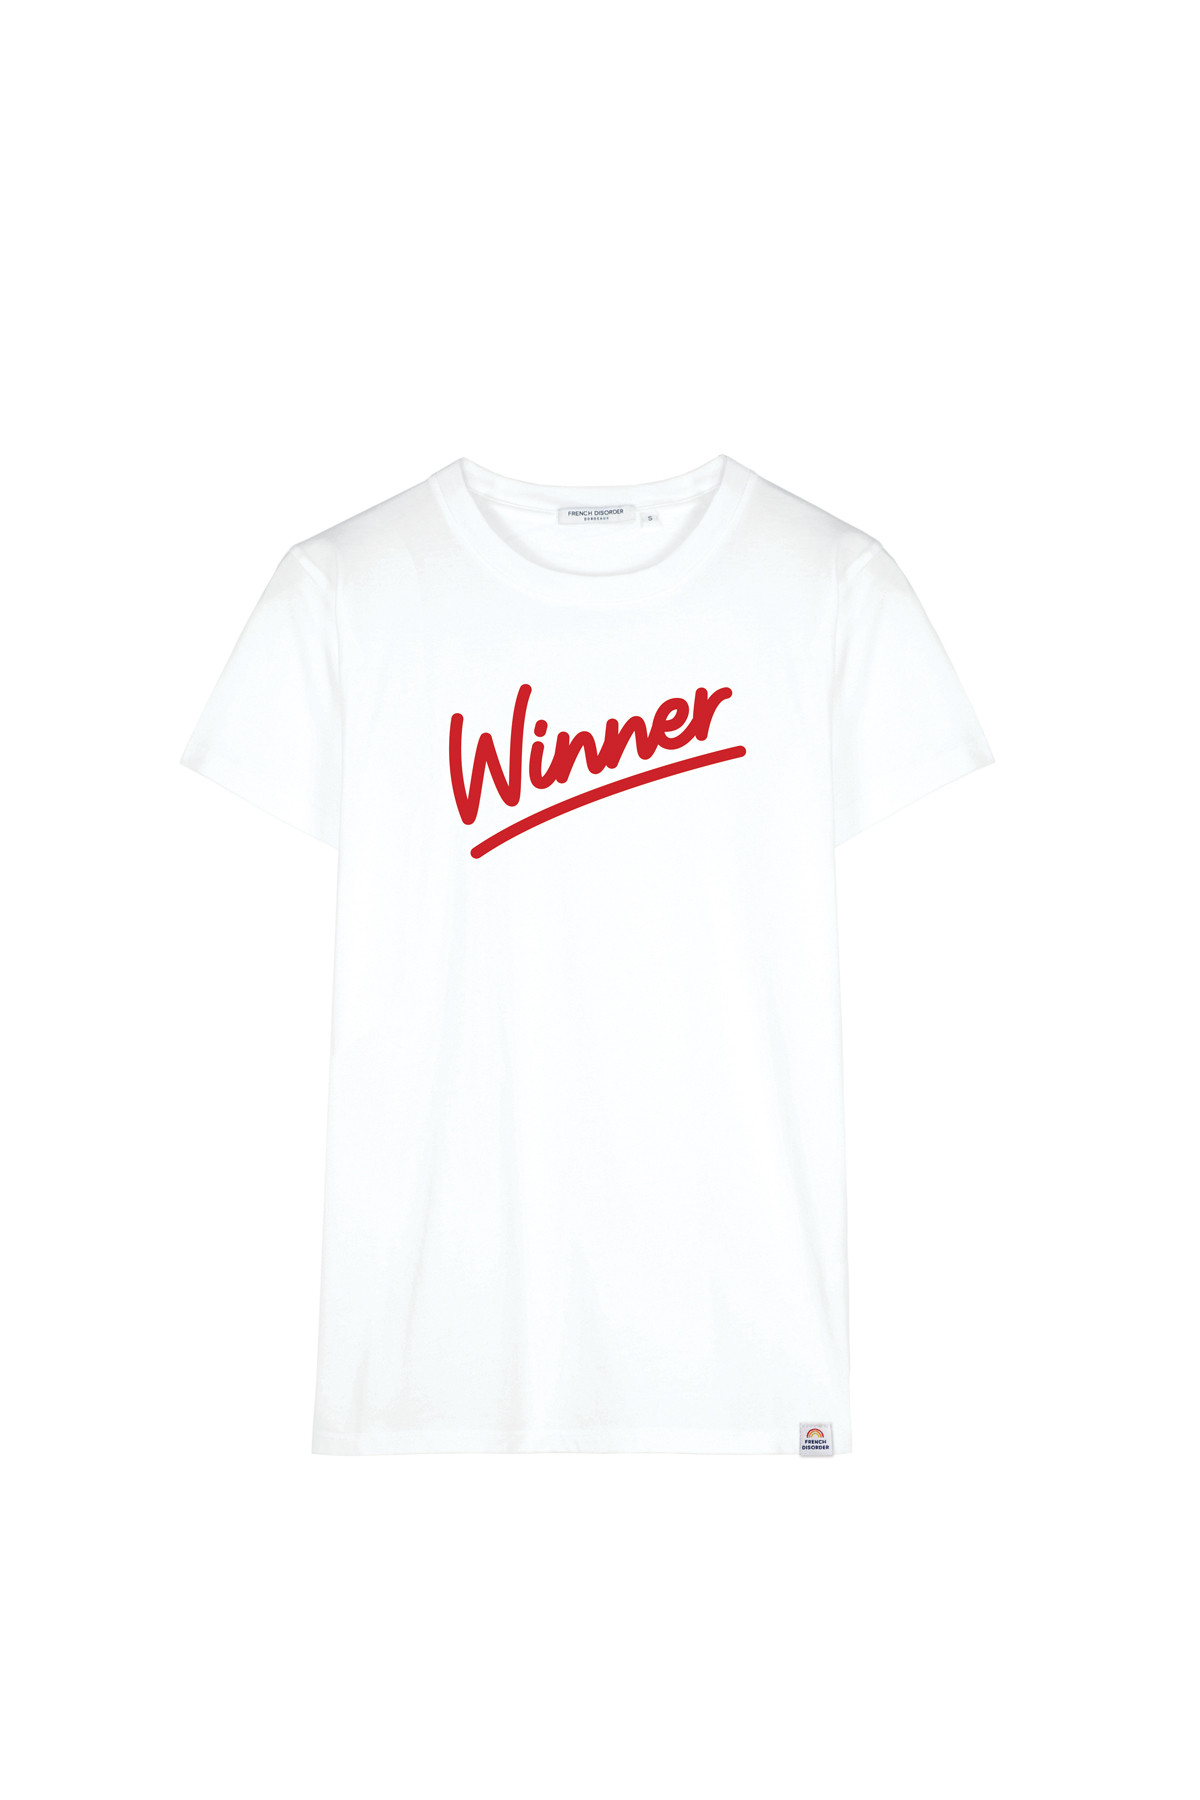 Tshirt WINNER French Disorder